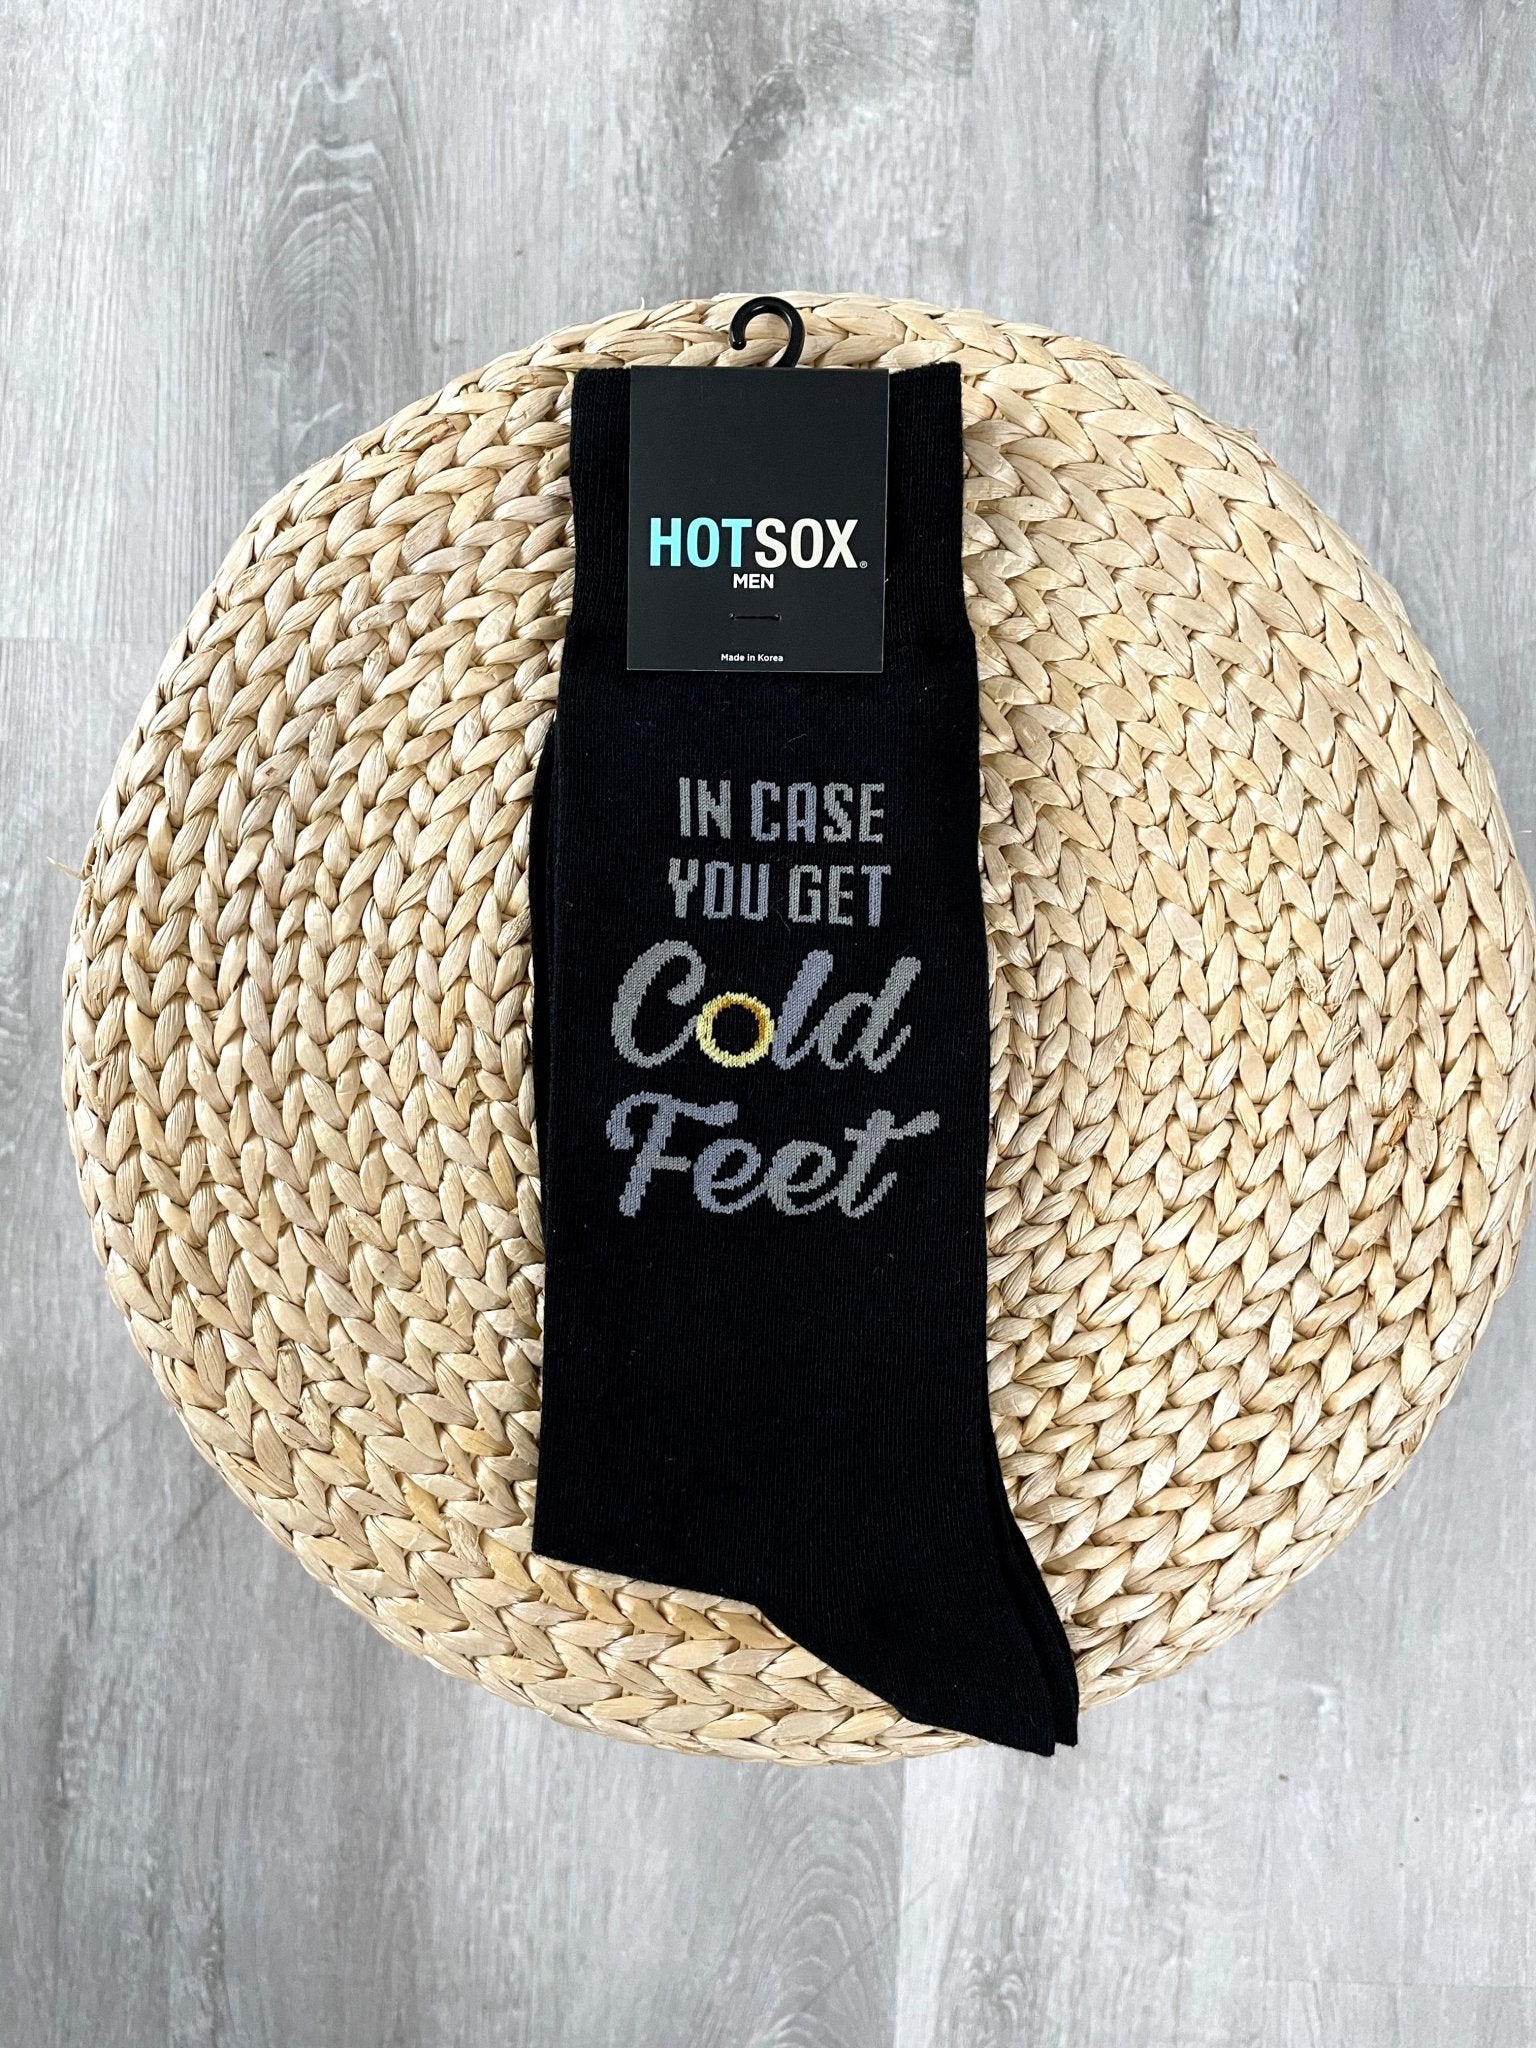 HotSox men's cold feet socks - Trendy Socks at Lush Fashion Lounge Boutique in Oklahoma City